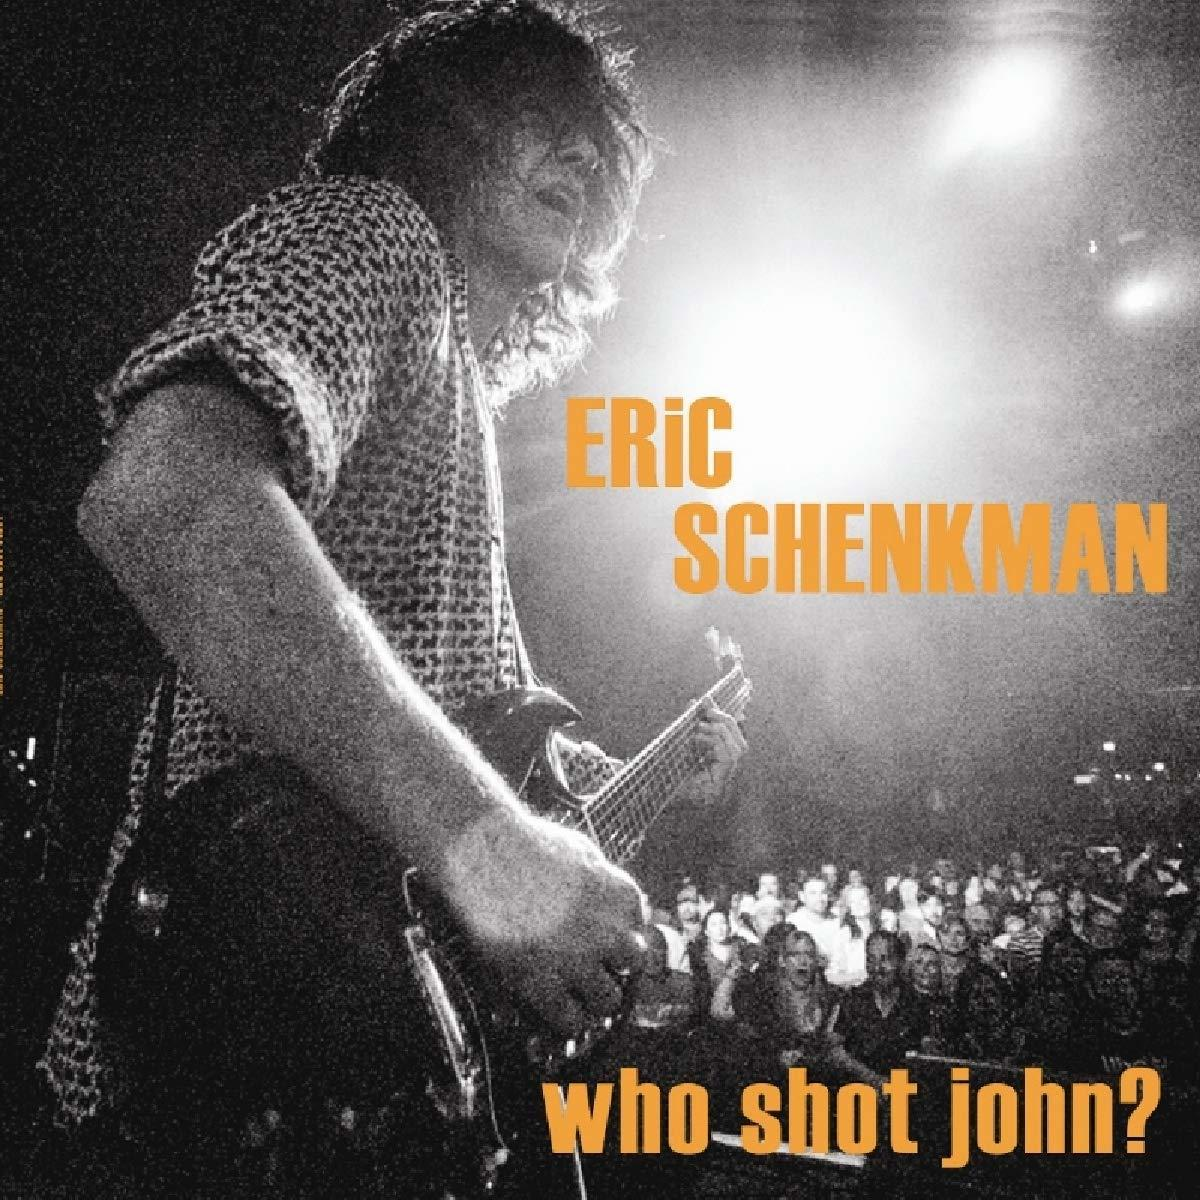 Eric Schenkman - Who - John Shot (CD)